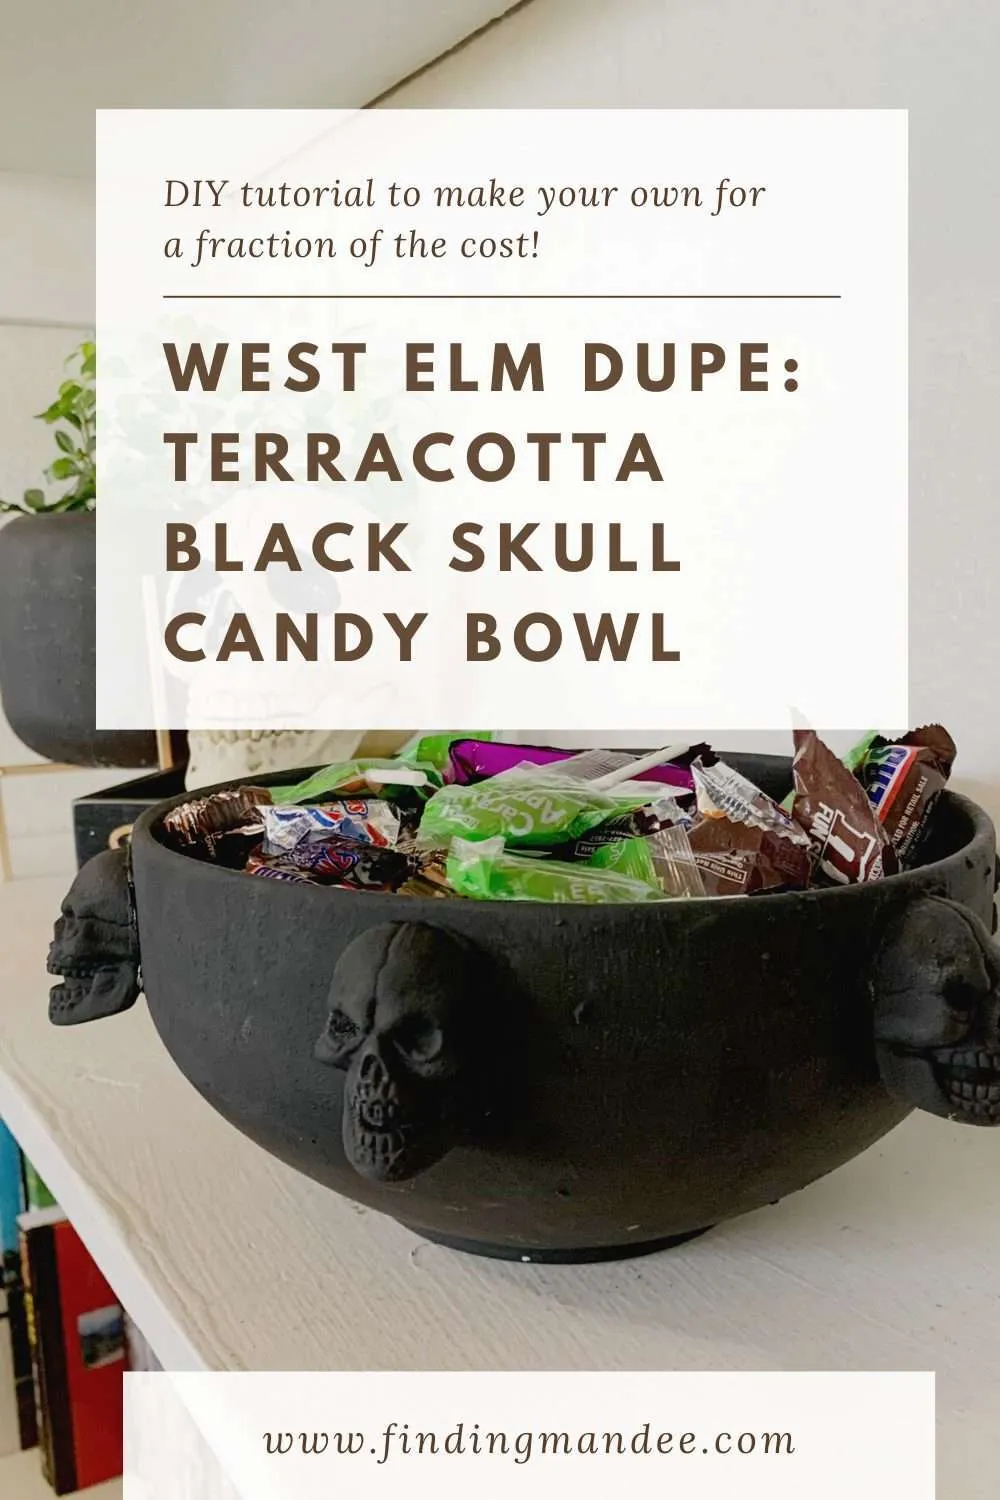 West Elm Dupe: Terracotta Black Skull Candy Bowl DIY Tutorial | Finding Mandee